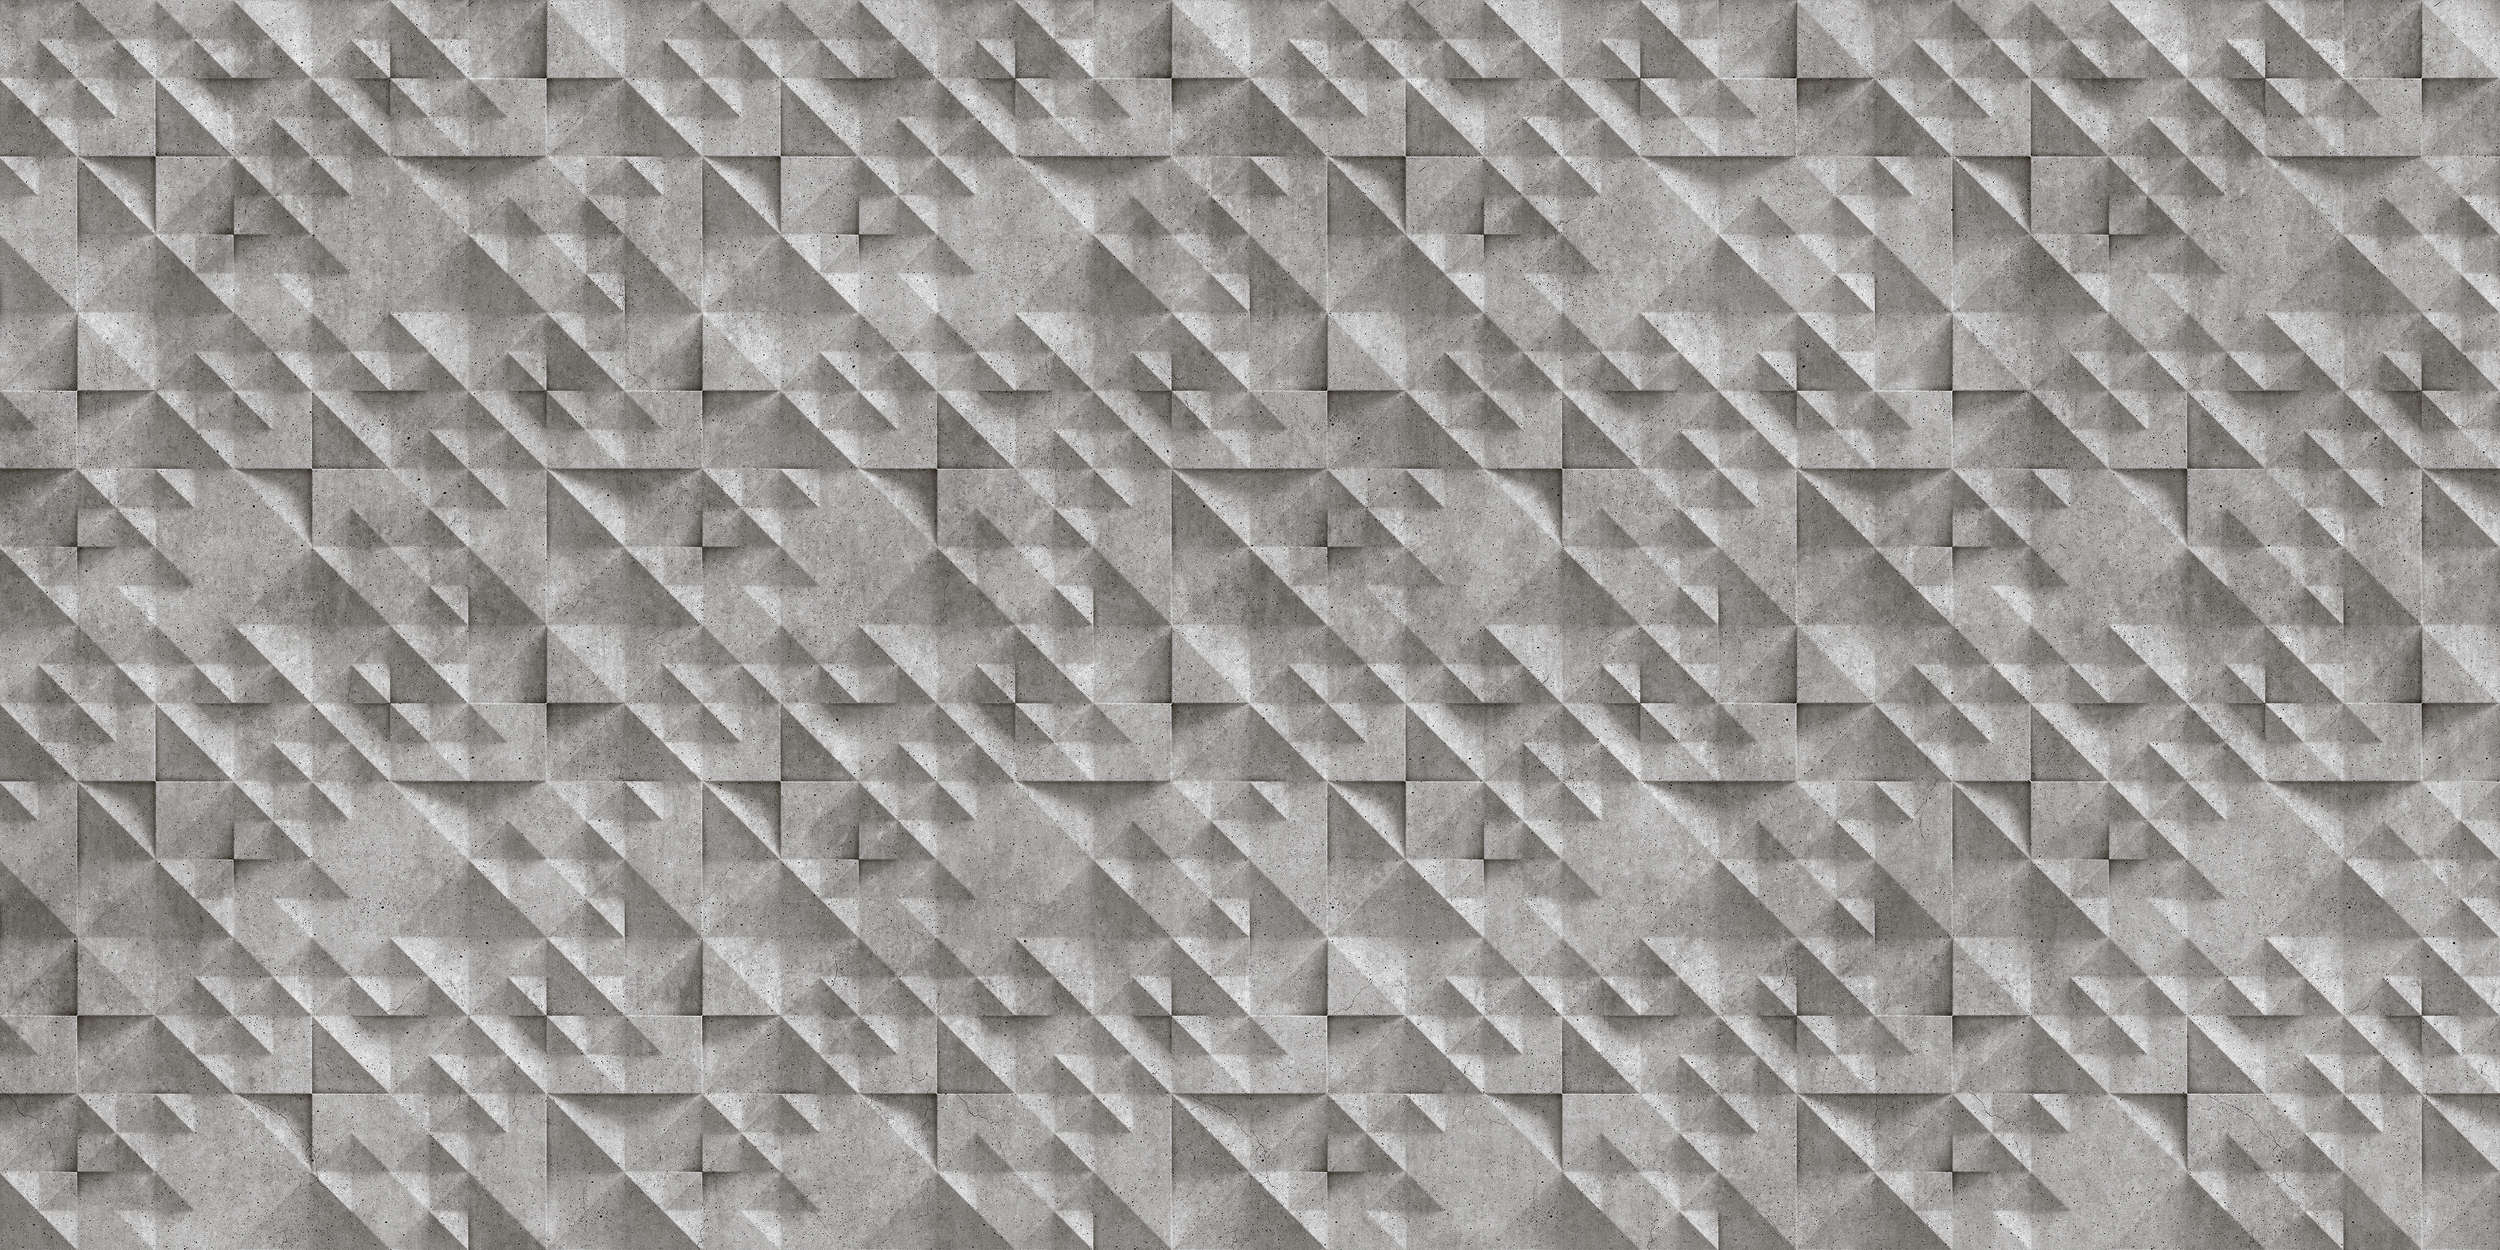             Concrete 2 - Cool 3D Concrete Rough Wallpaper - Grey, Black | Textured Non-woven
        